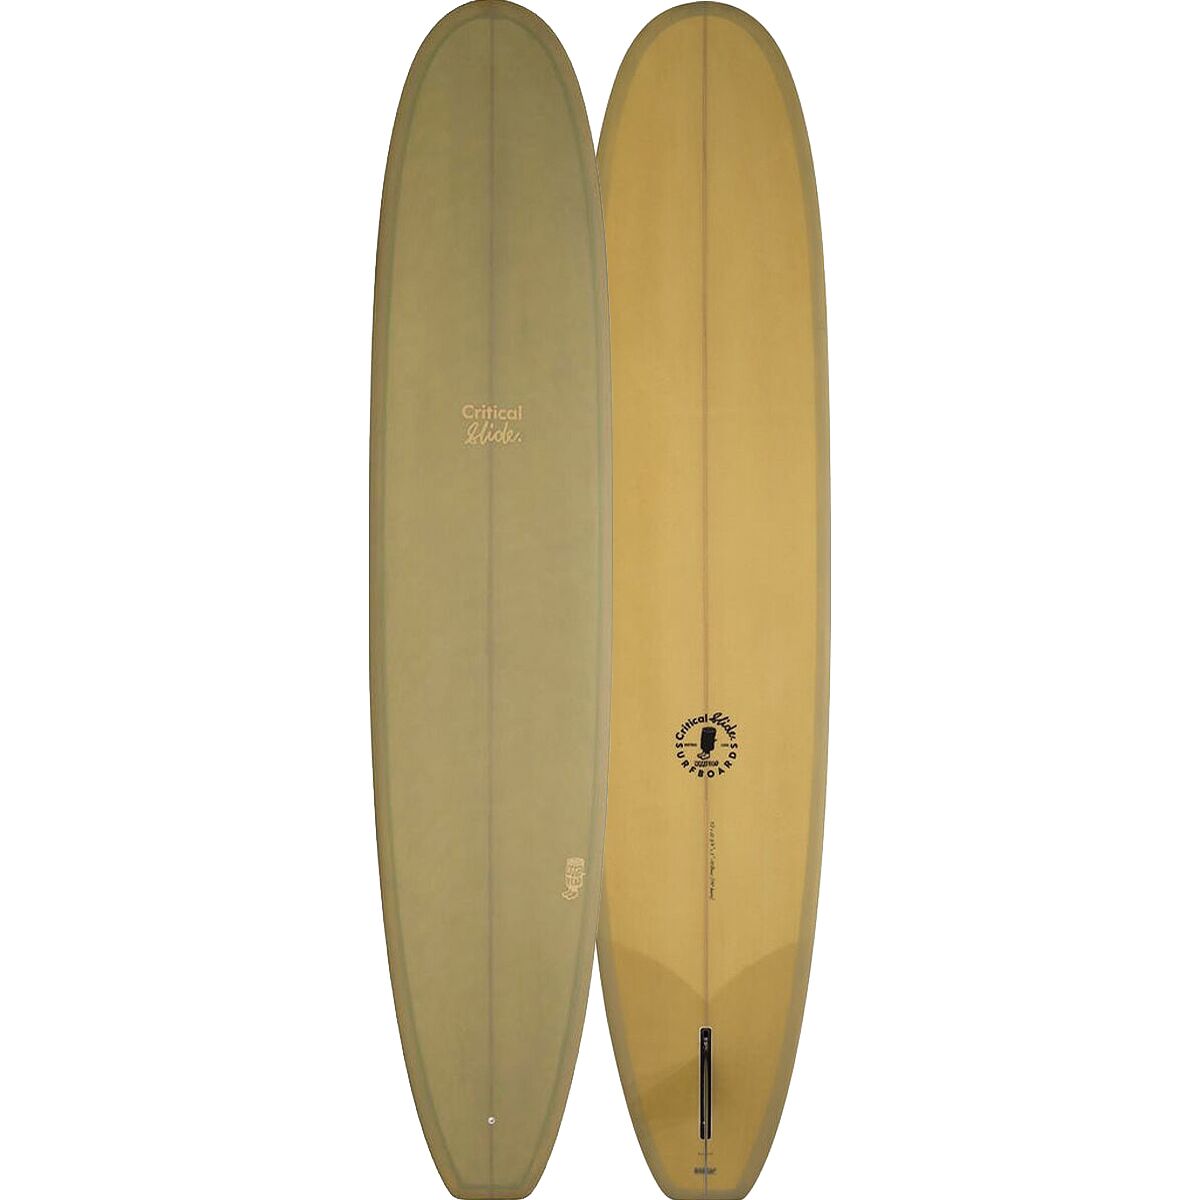 The Critical Slide Society Logger Head Longboard Surfboard